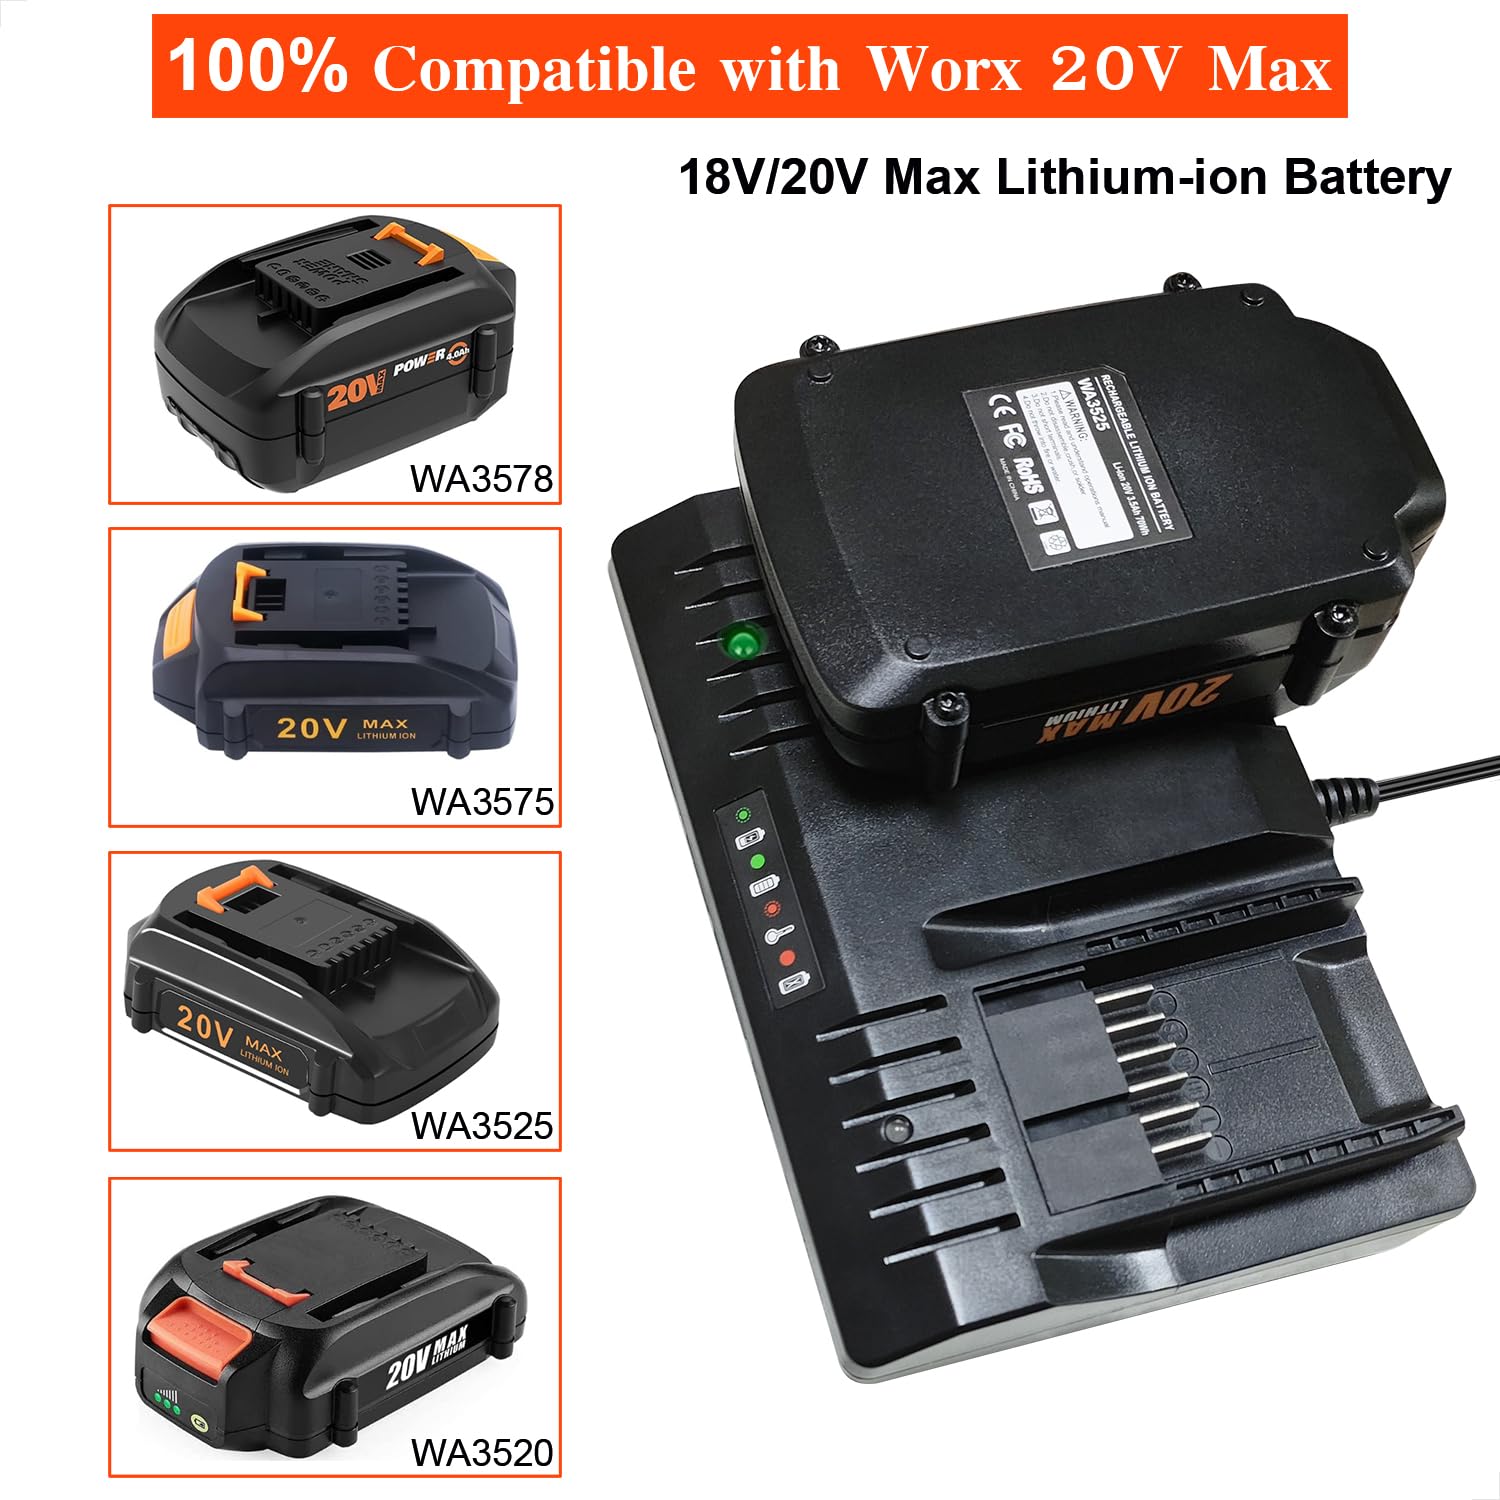 UNGINO WA3875 Replace Worx 20v Lithium Battery Charger Compatible with Worx 20v Batteries Wa3757 Wa3578 WA3525 Wa3522 WA3544 Etc